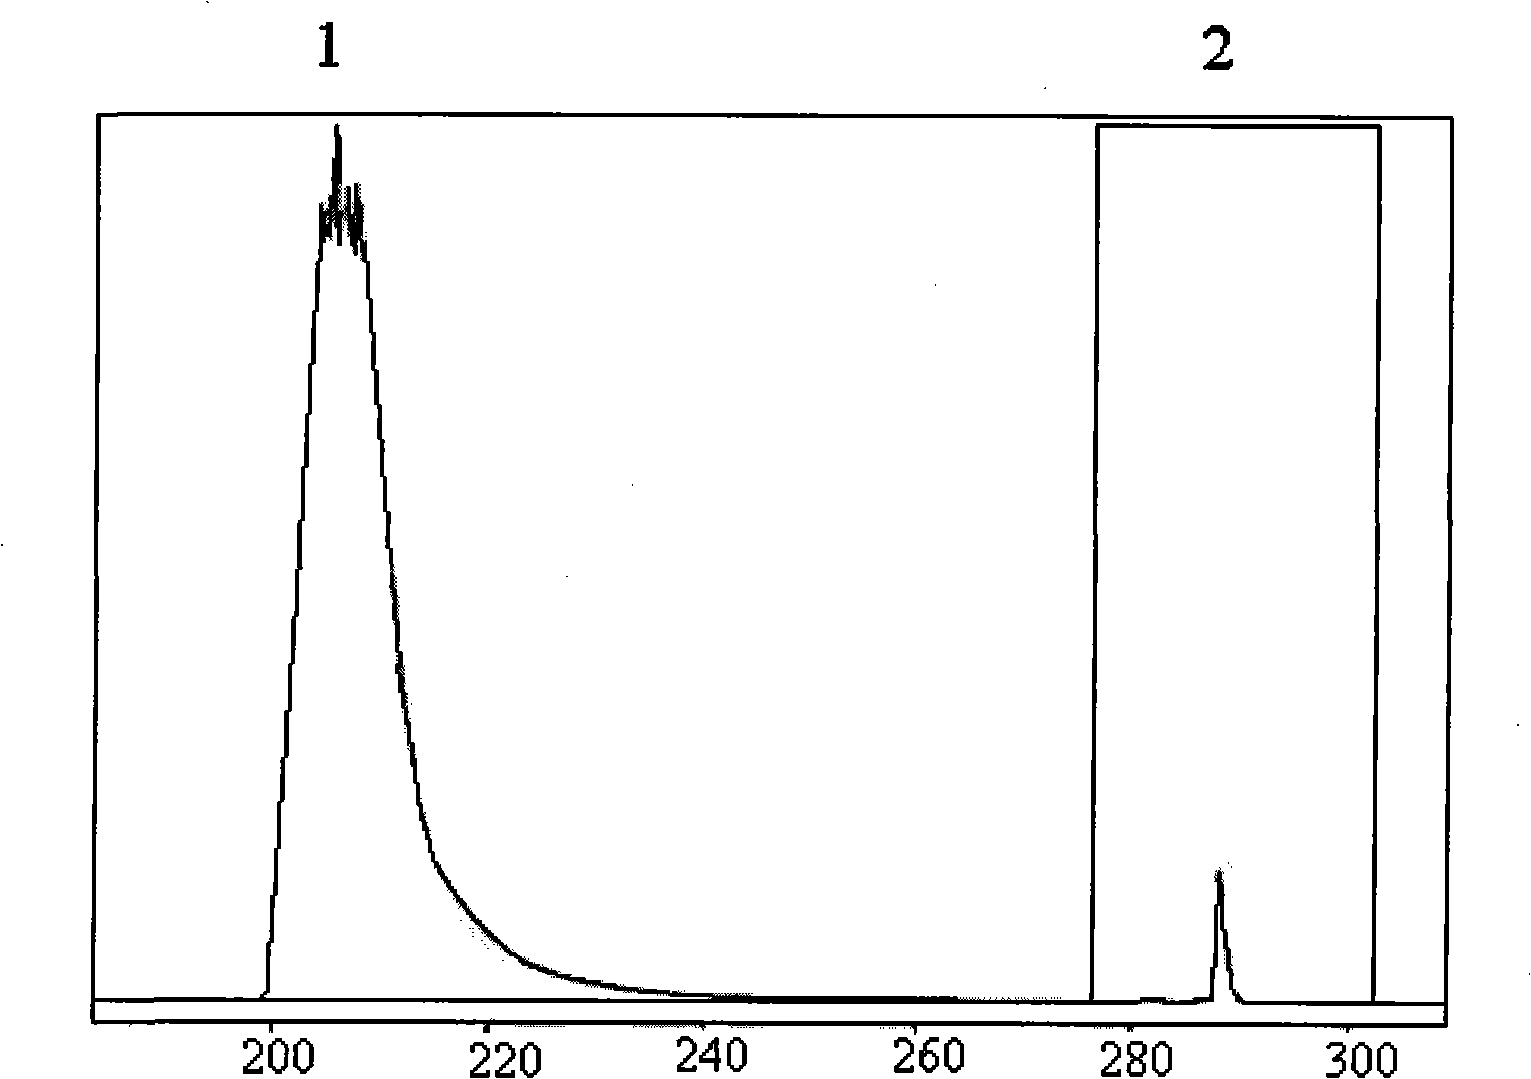 Method for purifying lysostaphin by antibody affinity chromatography